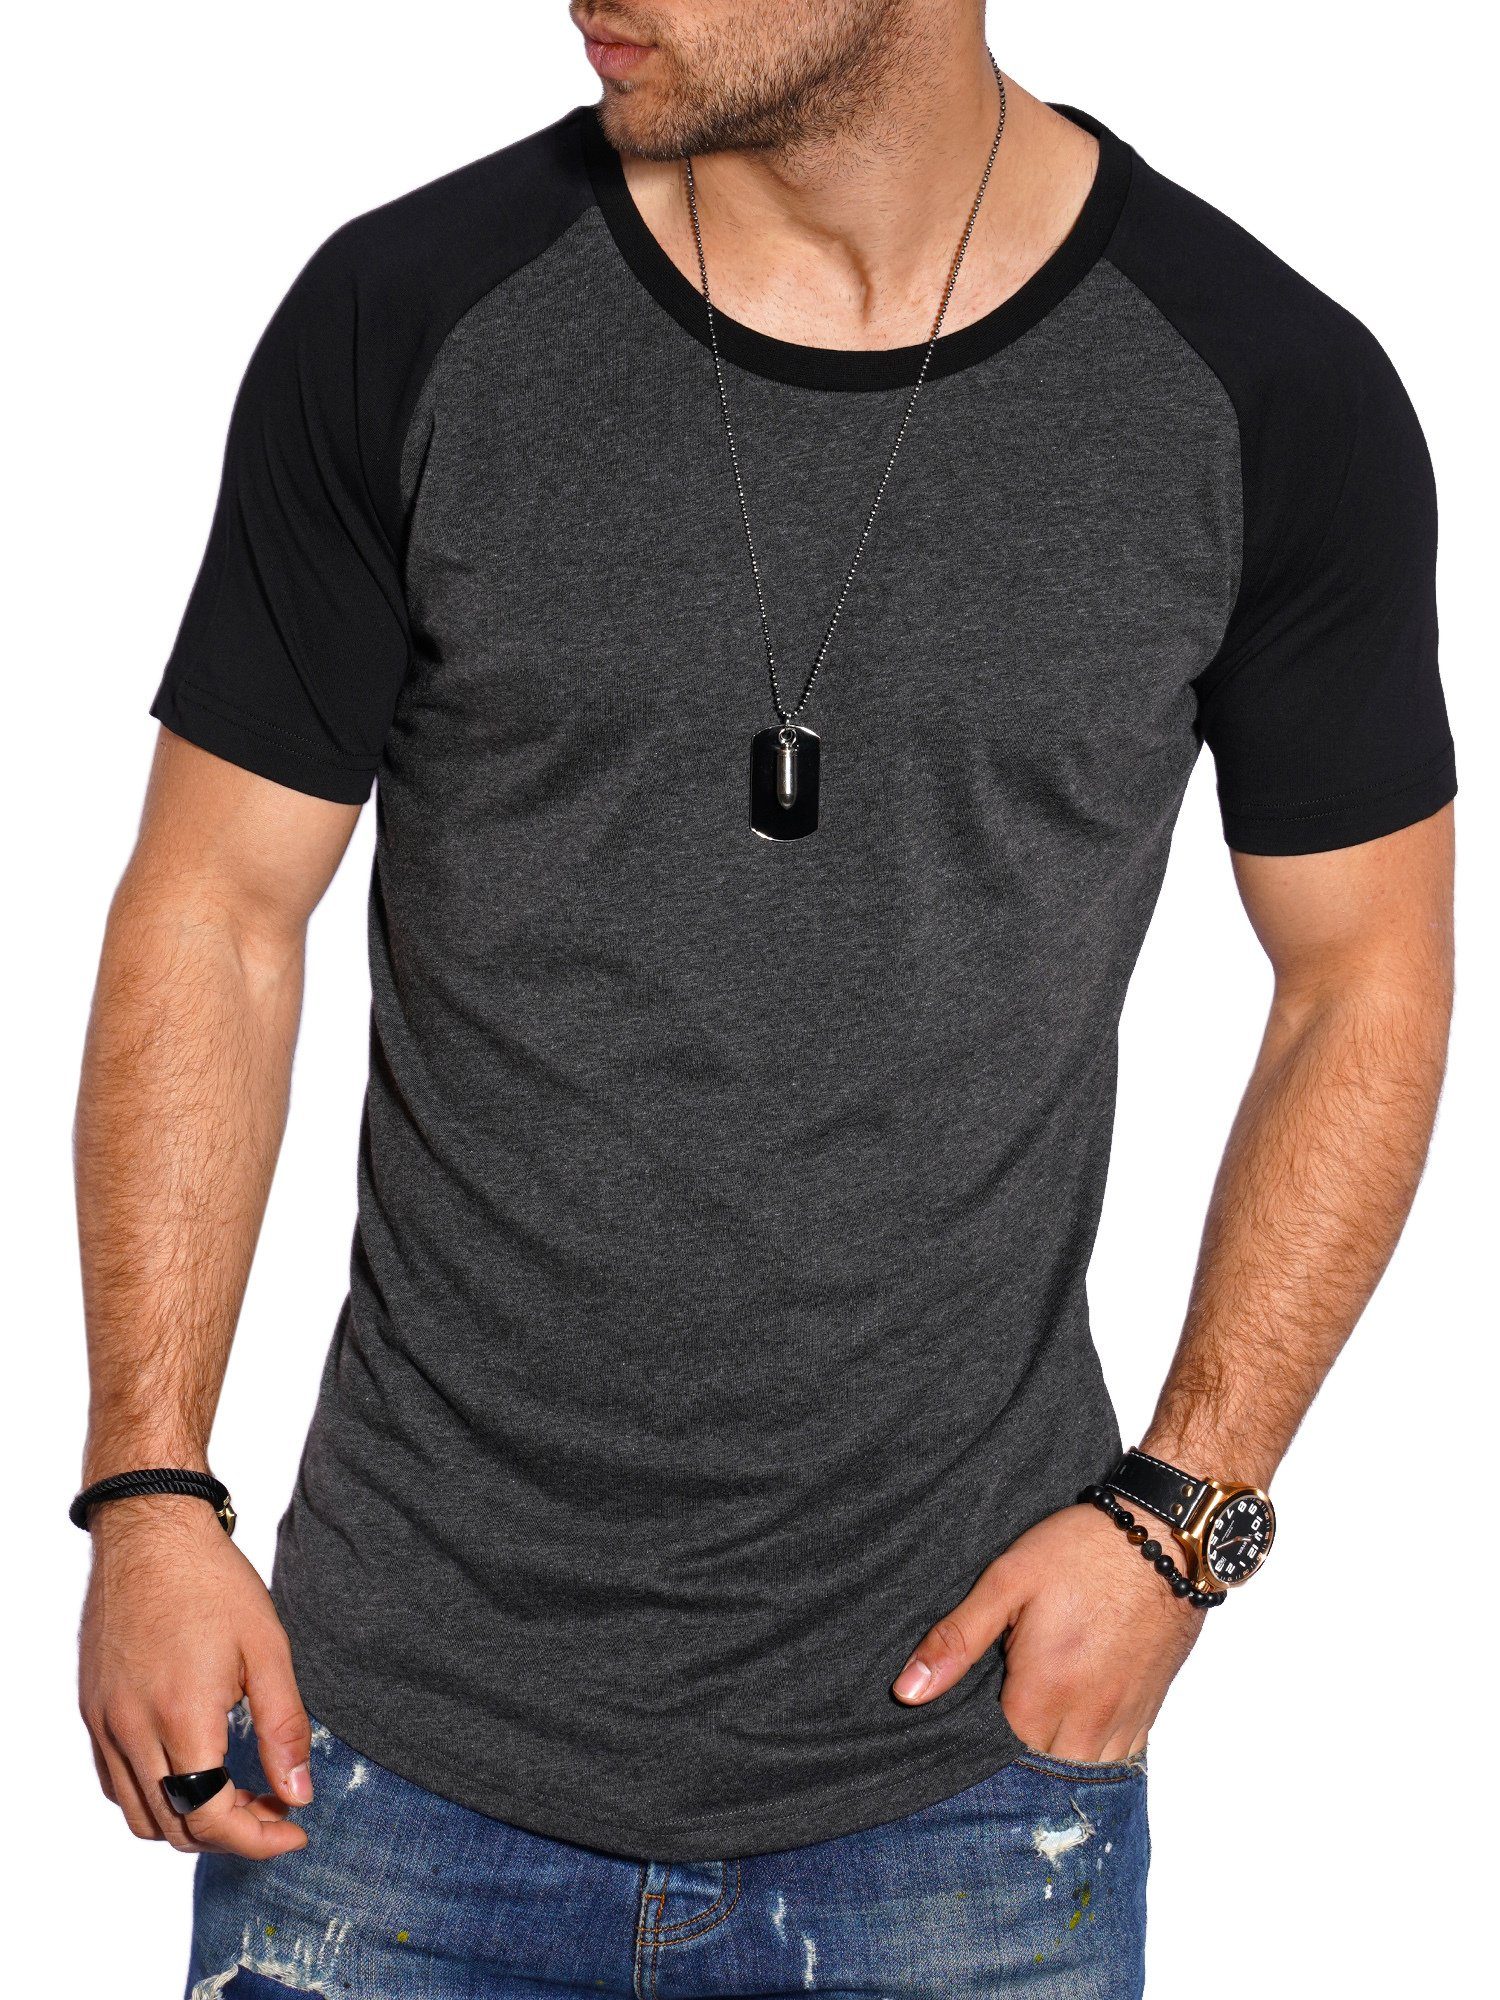 Raglan-Stil SDBOISE im T-Shirt Basic Style-Division Dunkelgrau-Schwarz